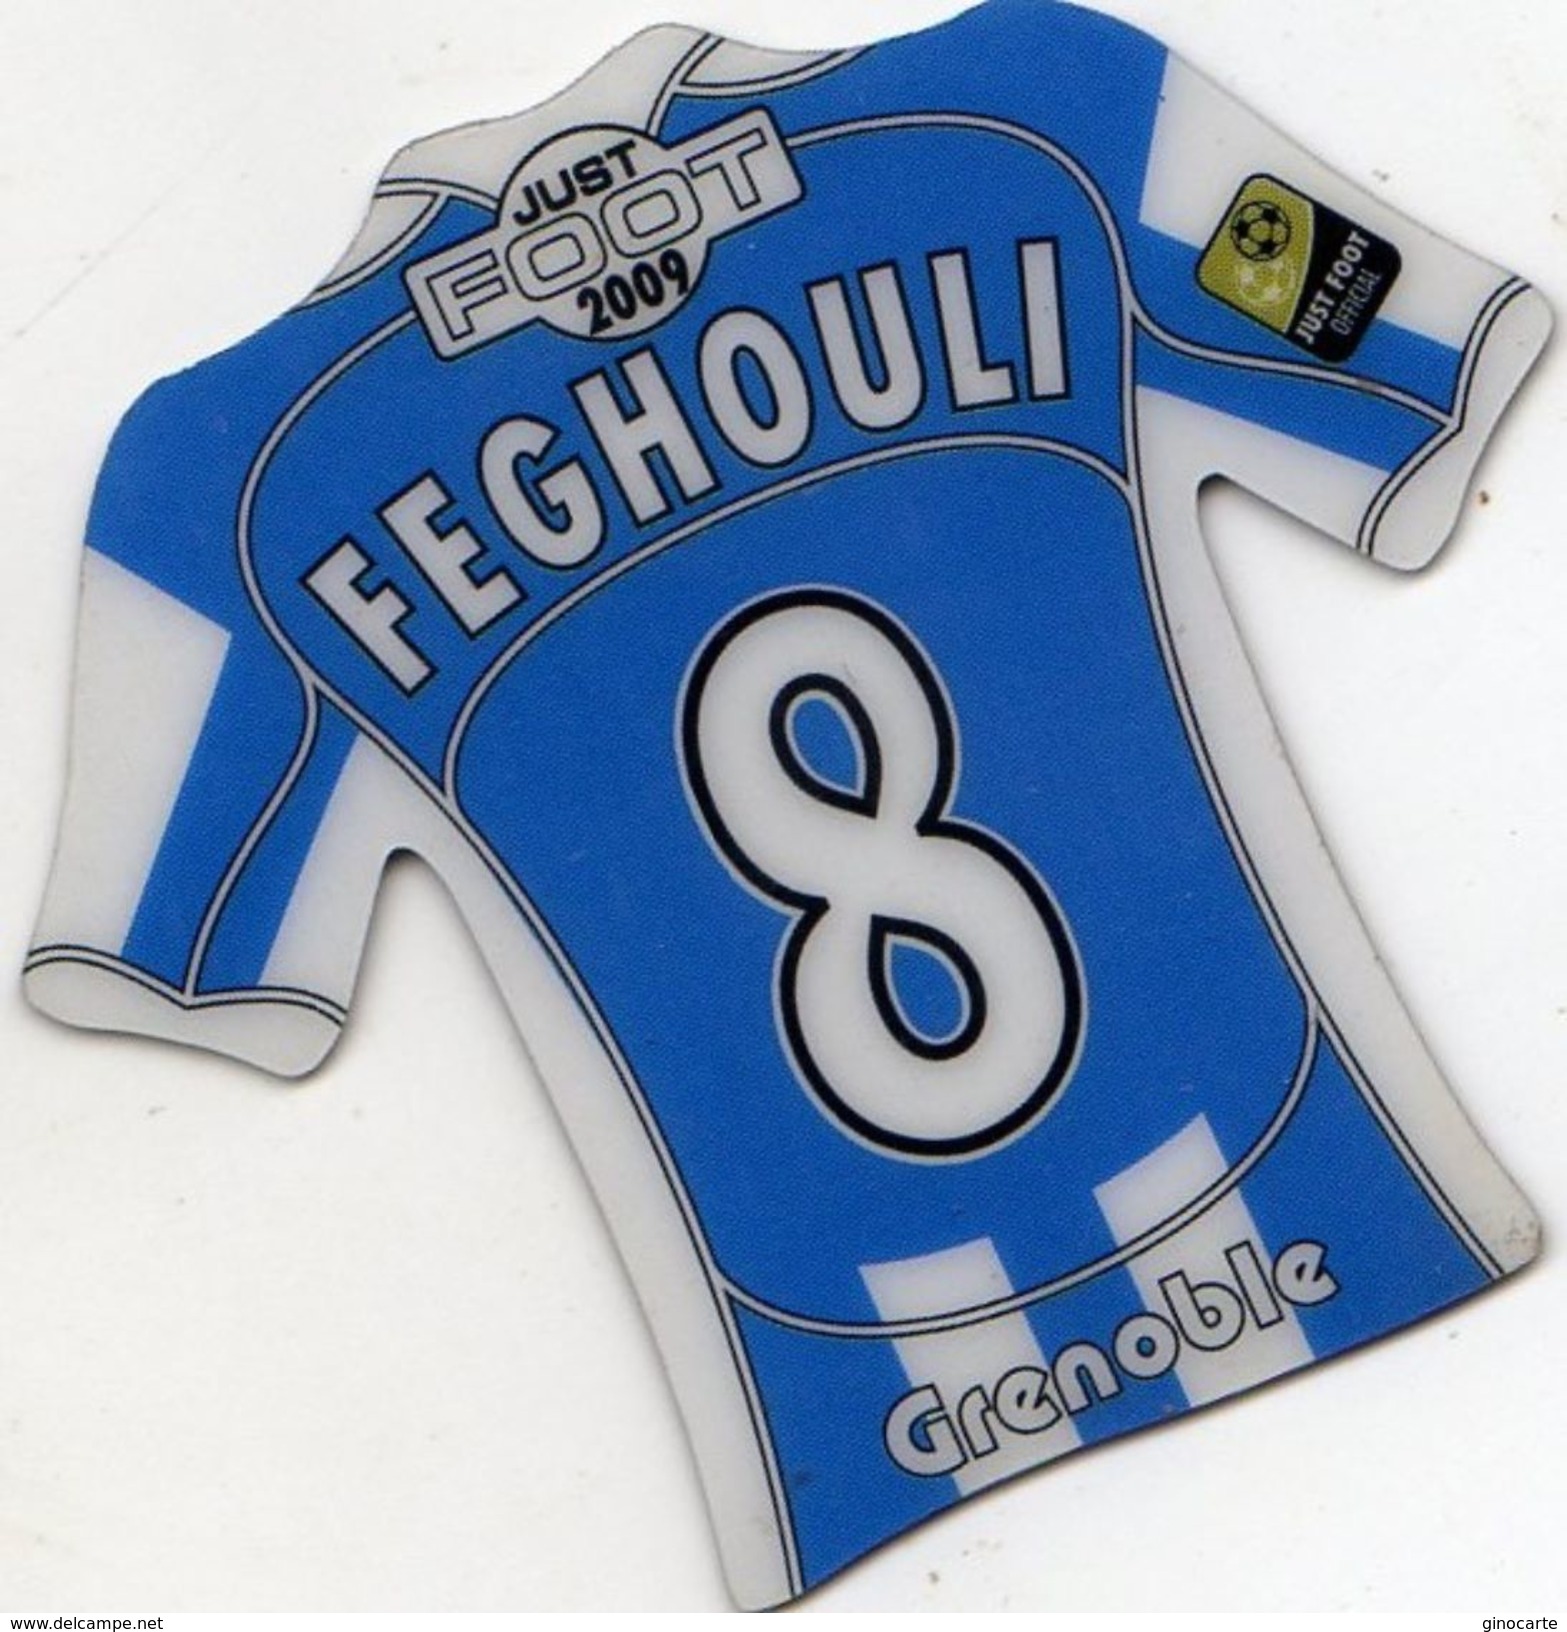 Magnet Magnets Maillot De Football Pitch Grenoble Feghouli 2009 - Sport